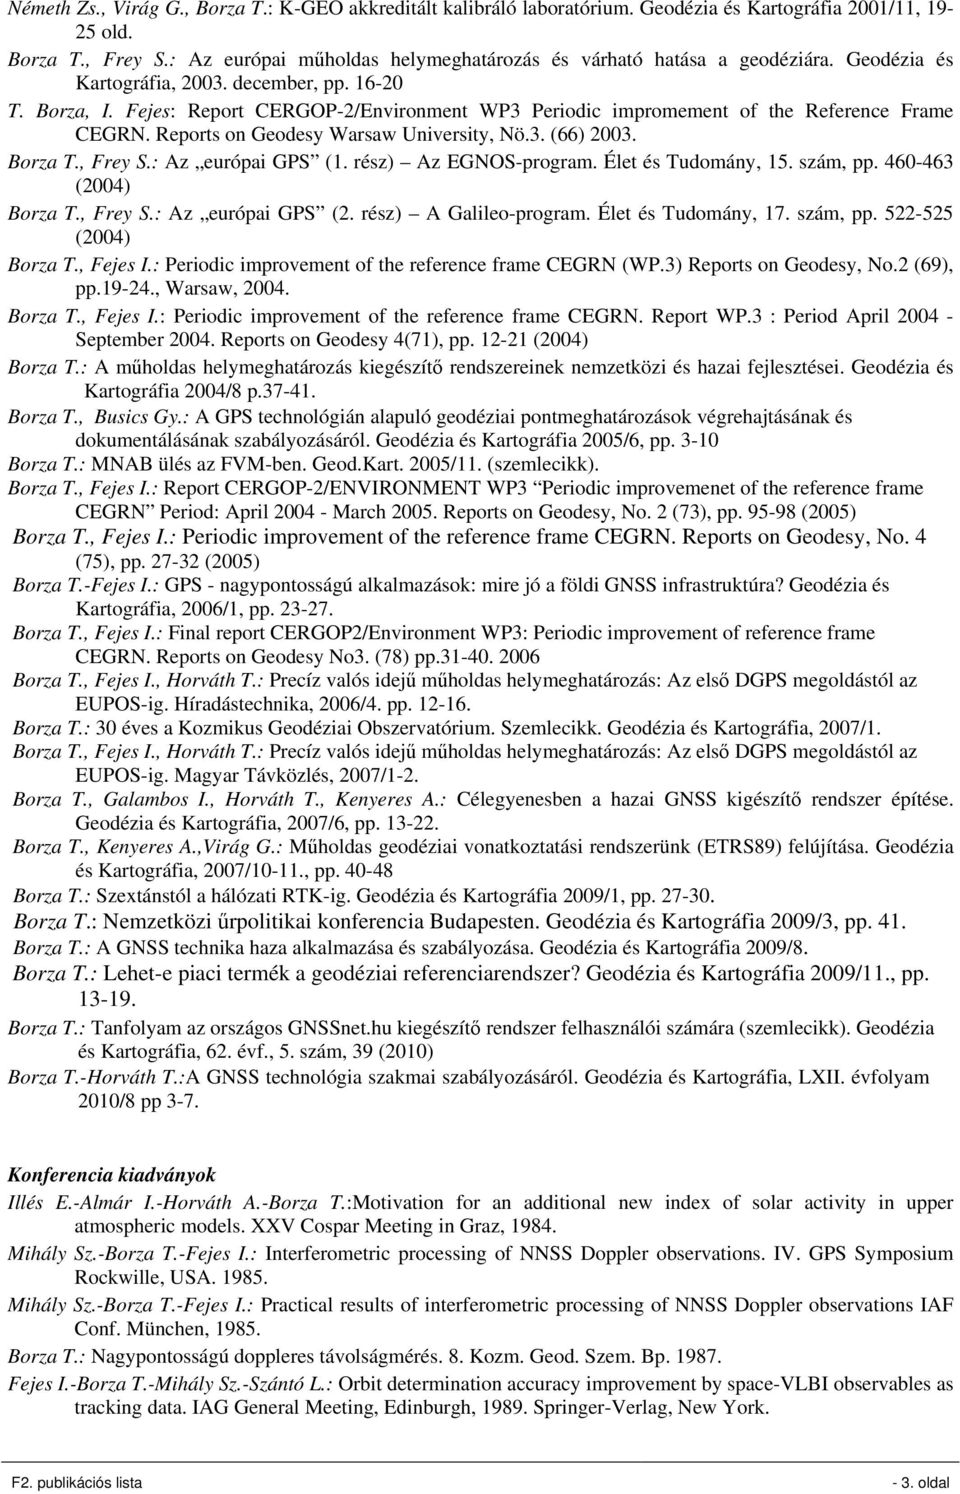 Fejes: Report CERGOP-2/Environment WP3 Periodic impromement of the Reference Frame CEGRN. Reports on Geodesy Warsaw University, Nö.3. (66) 2003. Borza T., Frey S.: Az európai GPS (1.